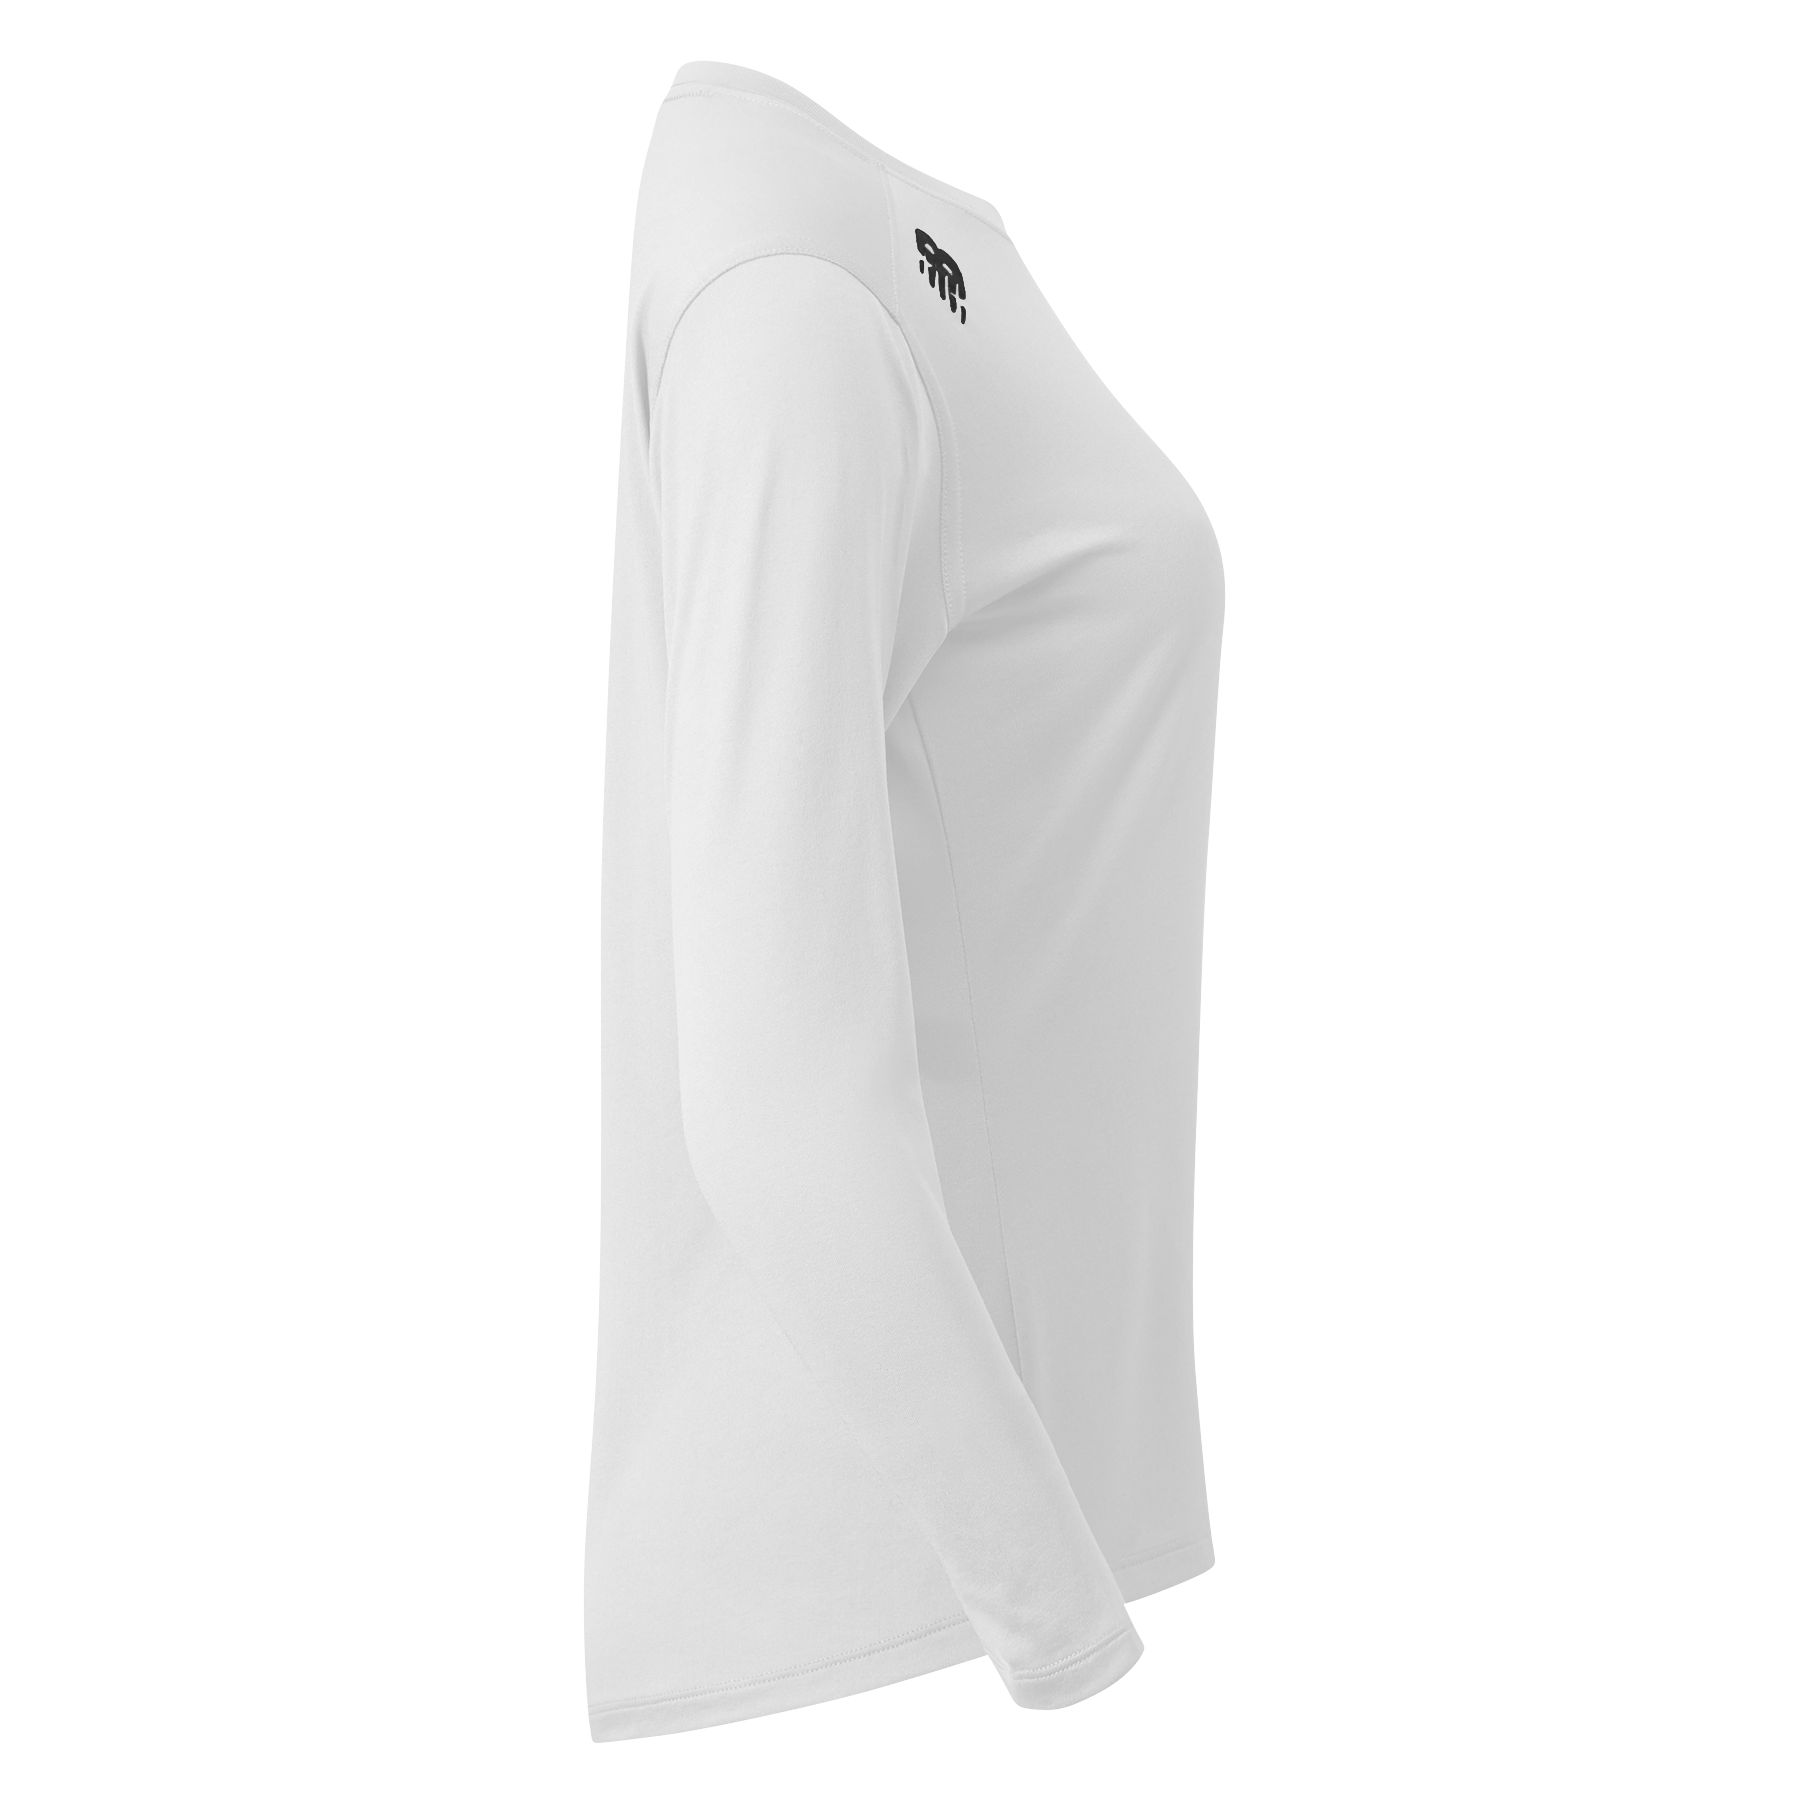 New Balance - Women's Long Sleeve T-Shirt (TMWT501 DH)